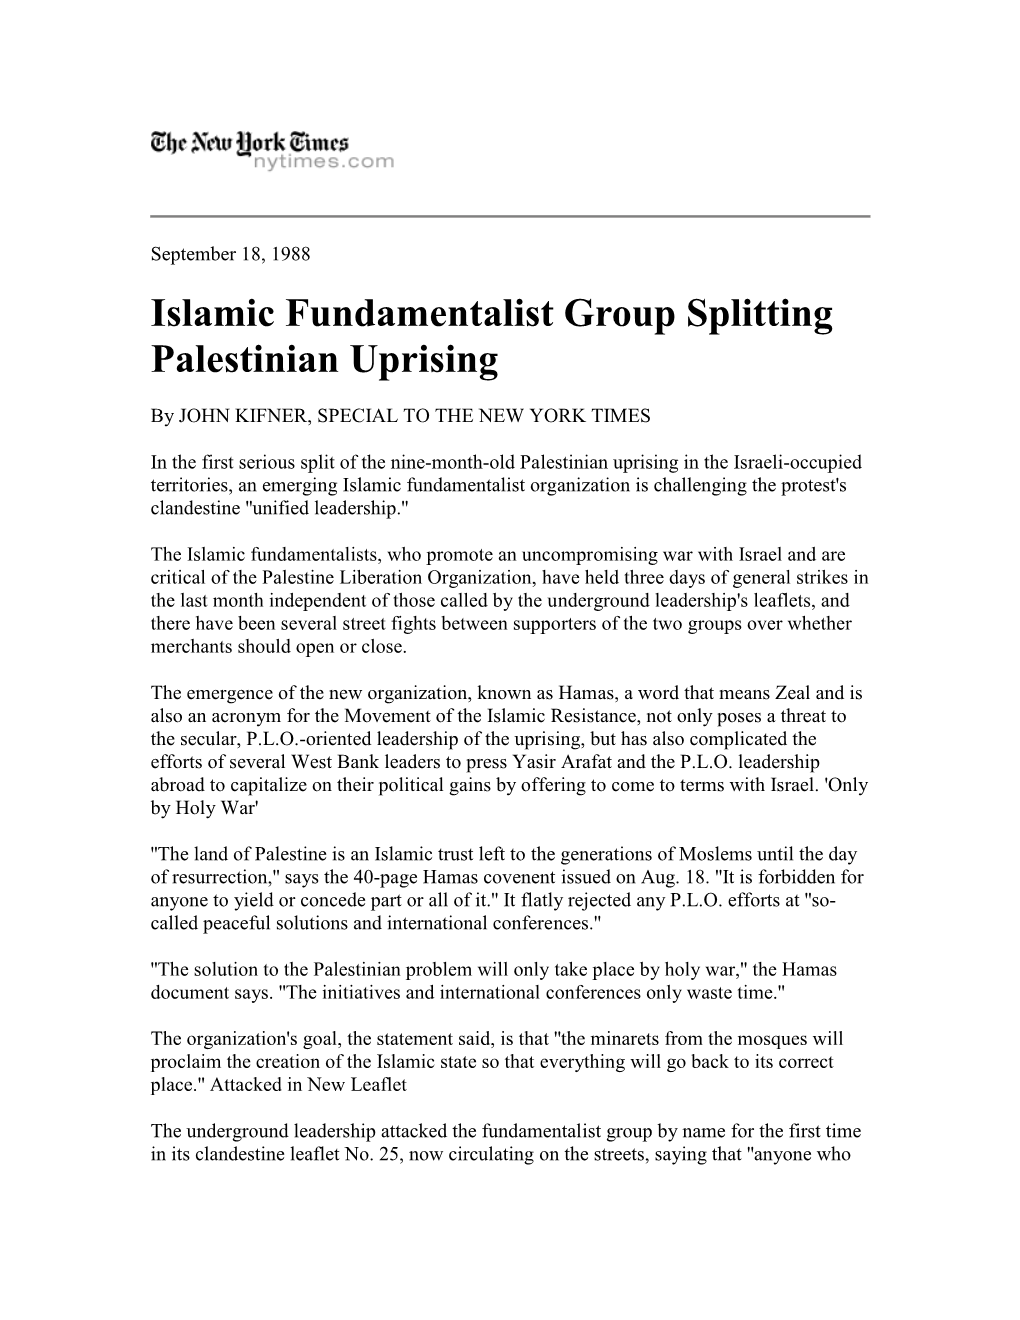 Islamic Fundamentalist Group Splitting Palestinian Uprising